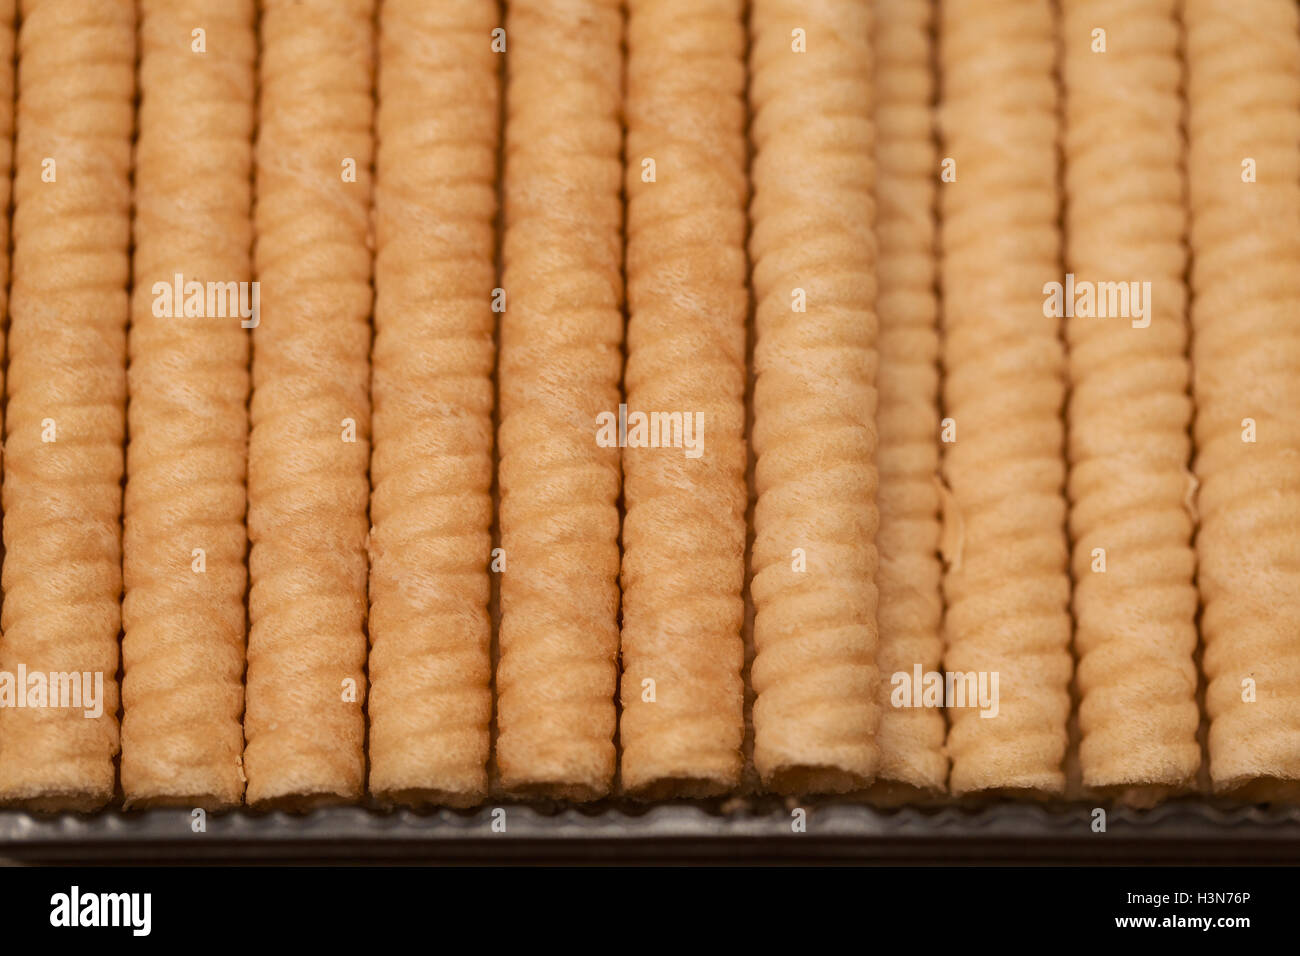 sweet rolls closeup Stock Photo